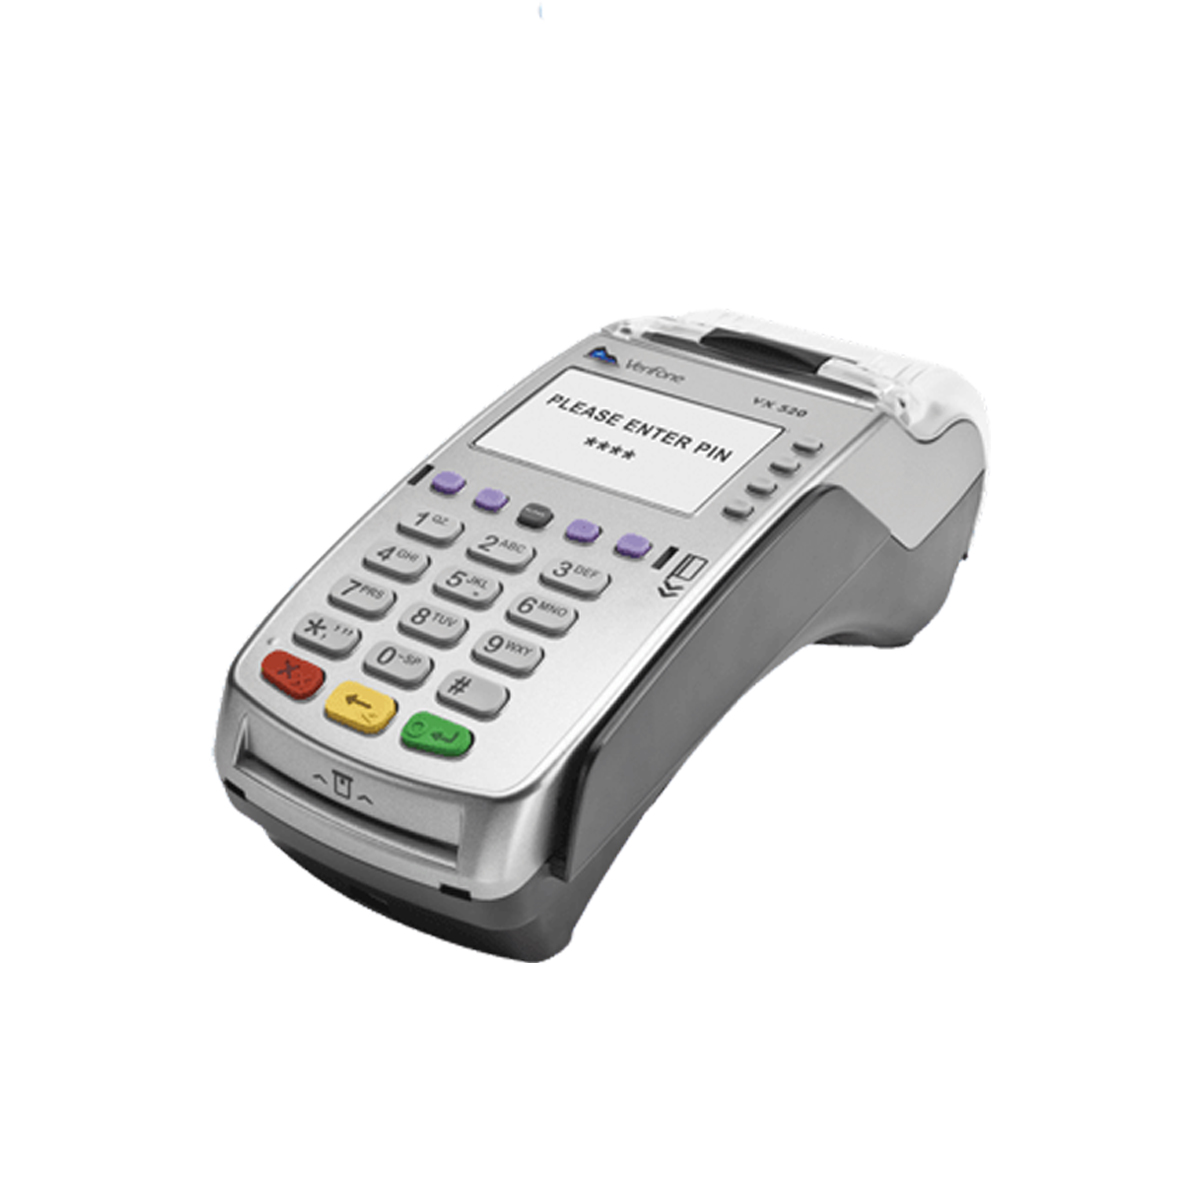 VeriFone VX520 Handheld Credit Card Terminal